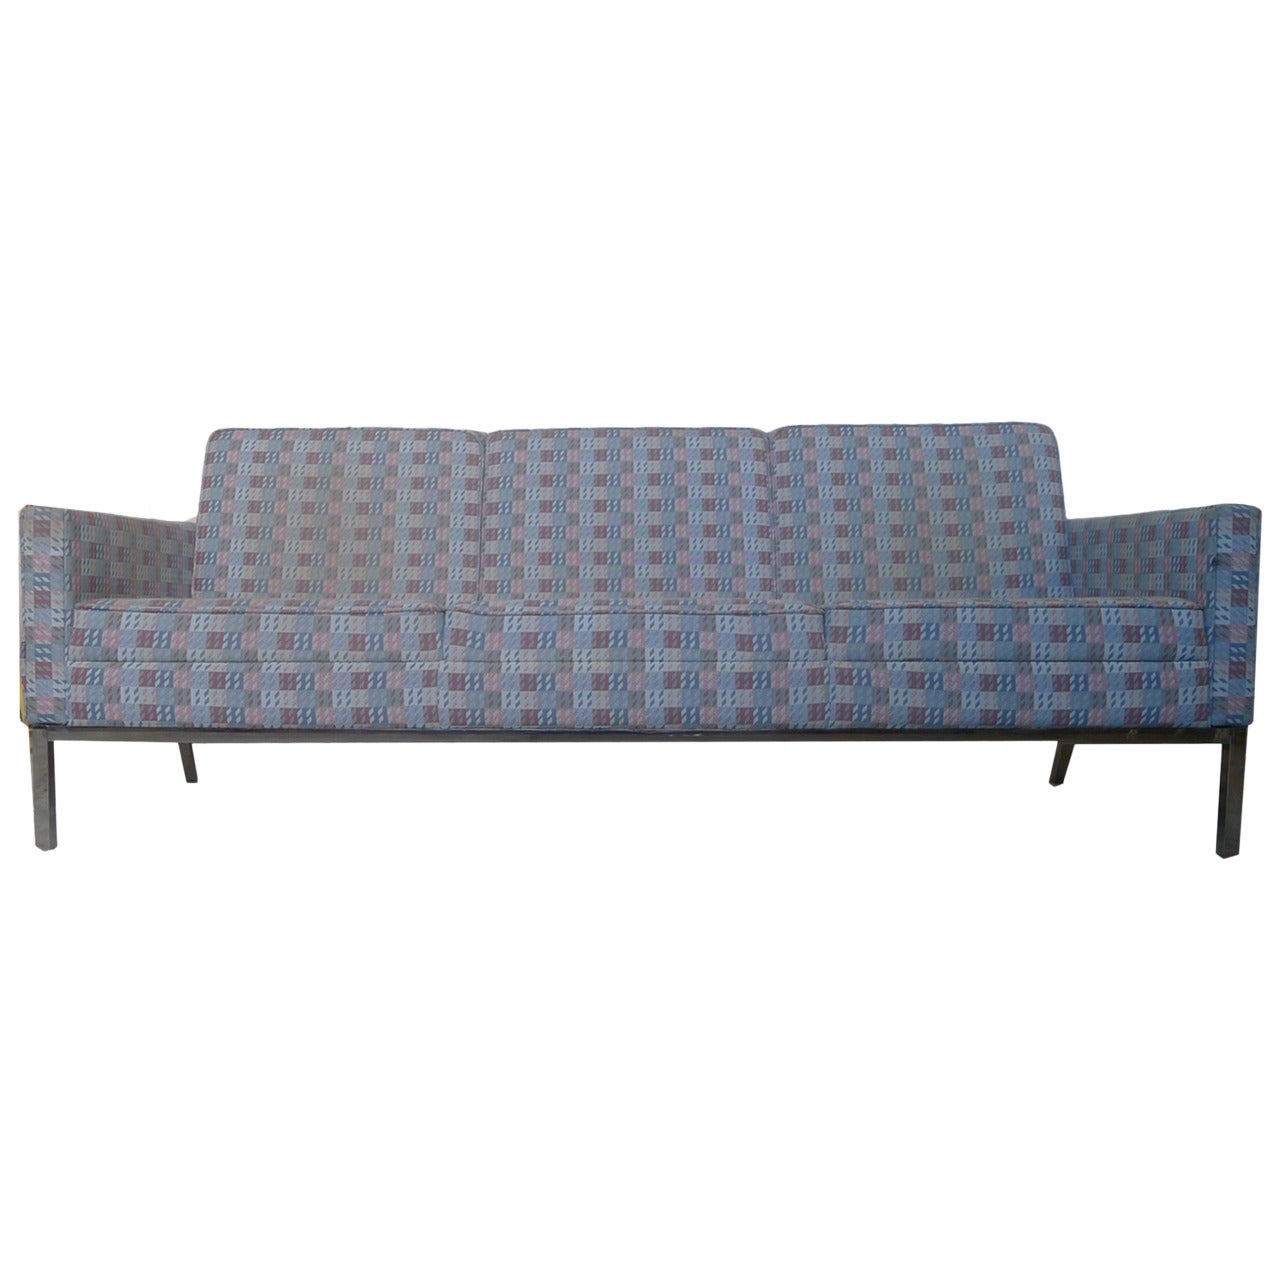 Sleek Florence Knoll Style Three-Seat Sofa by Steelcase Chrome Base